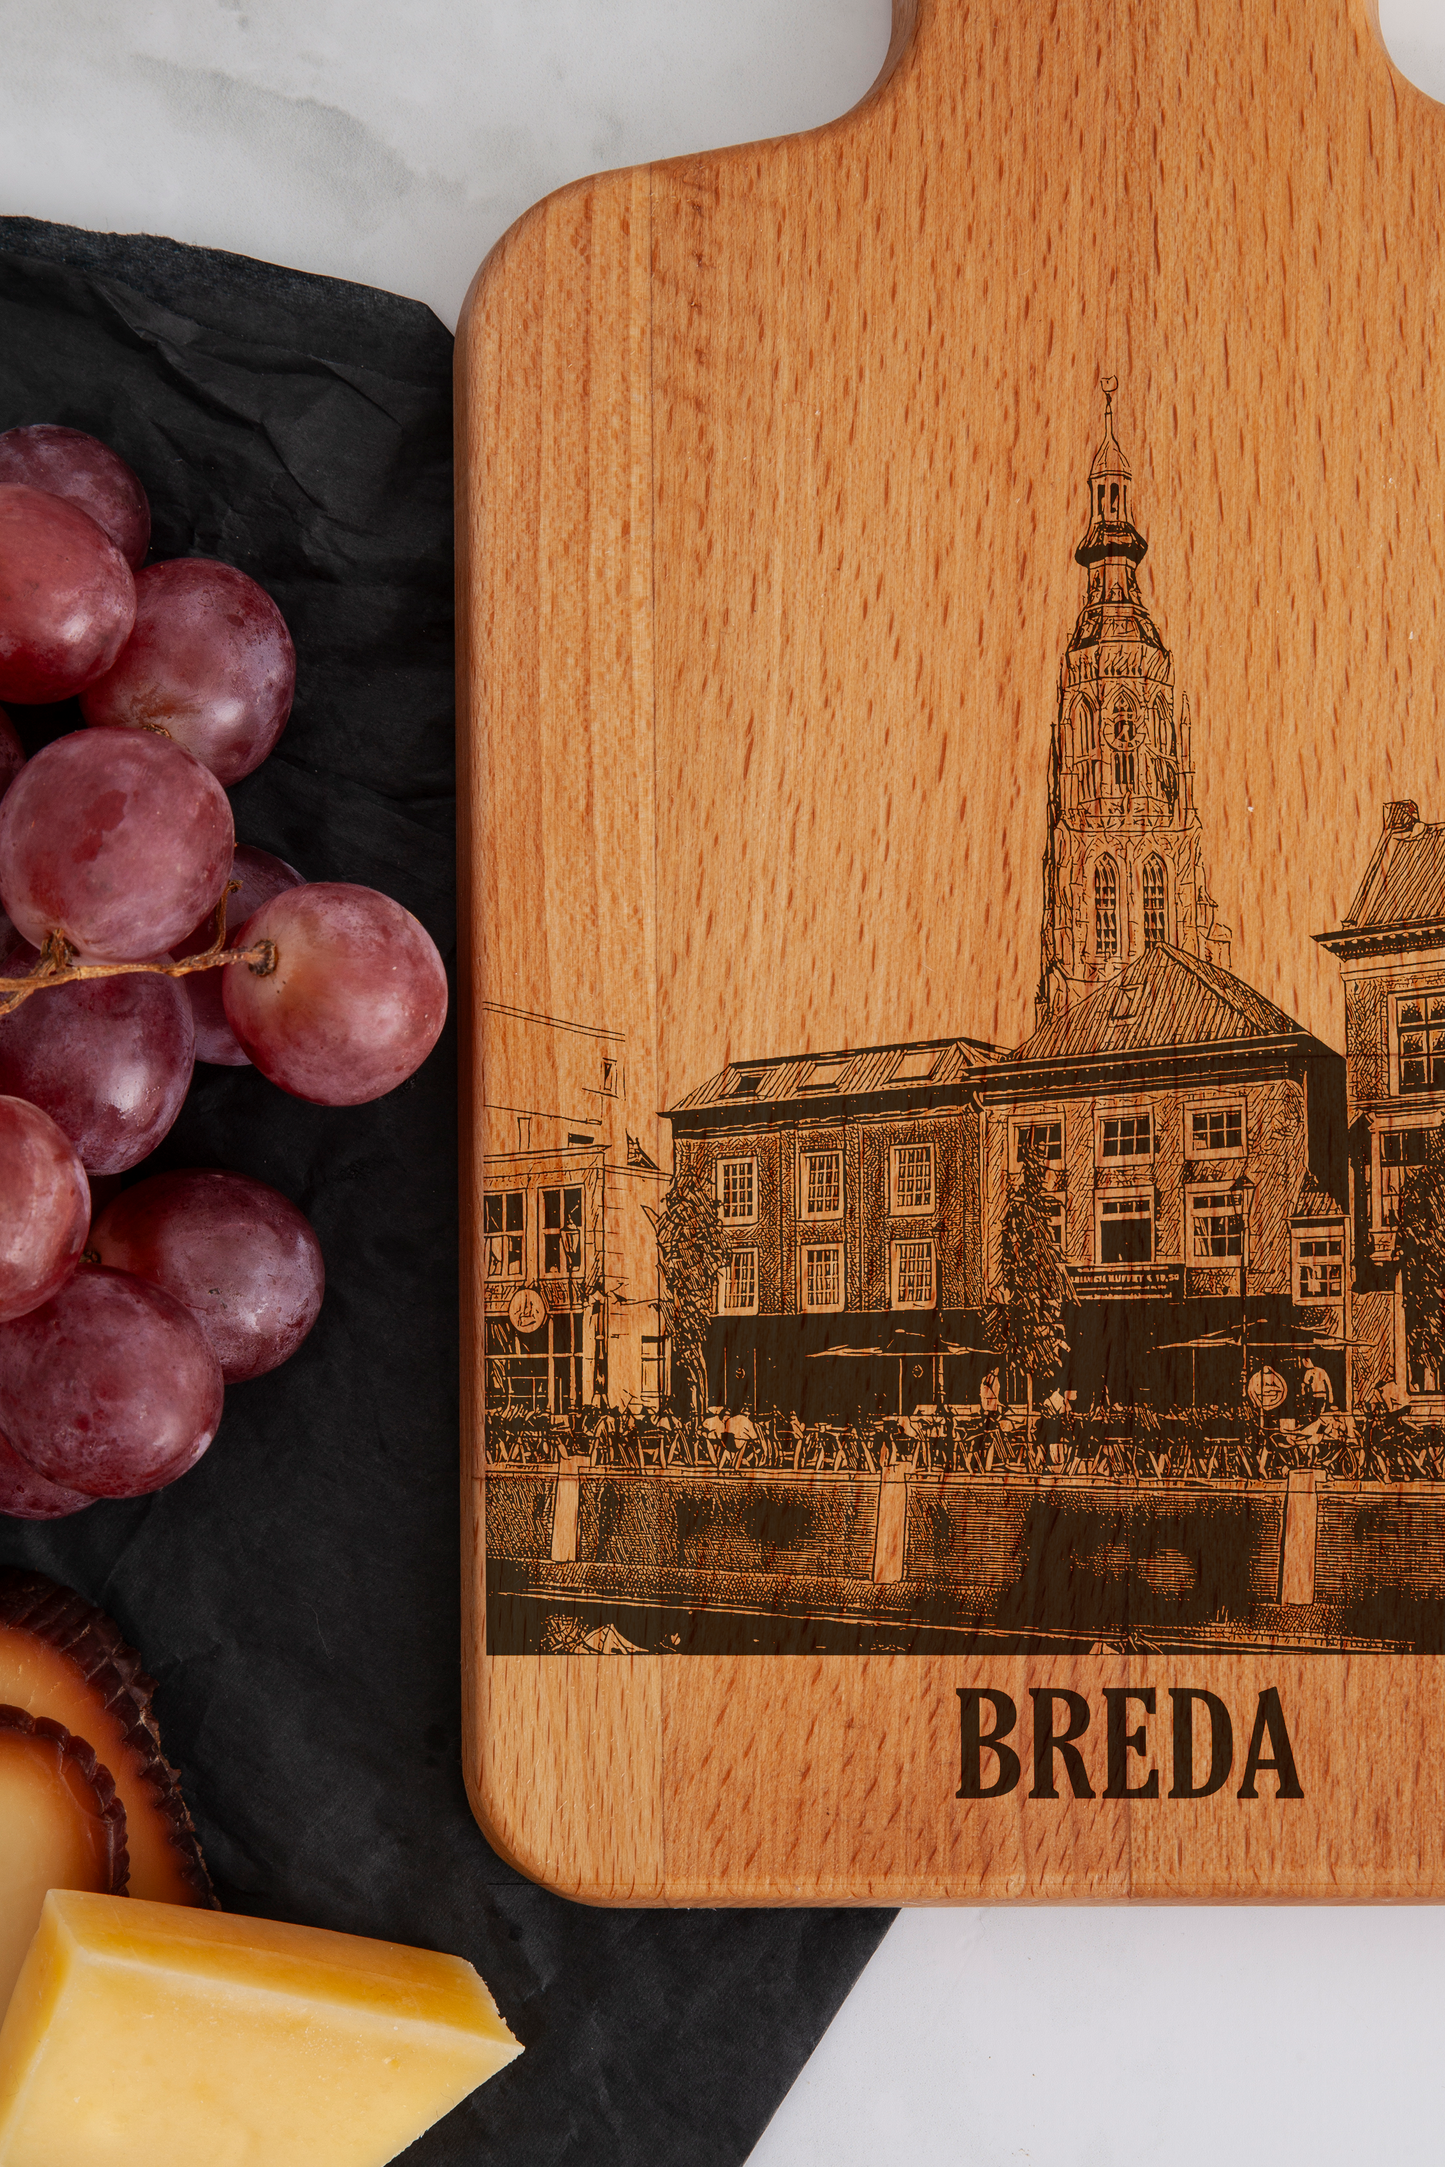 Breda, Grote Kerk, cheese board, close-up